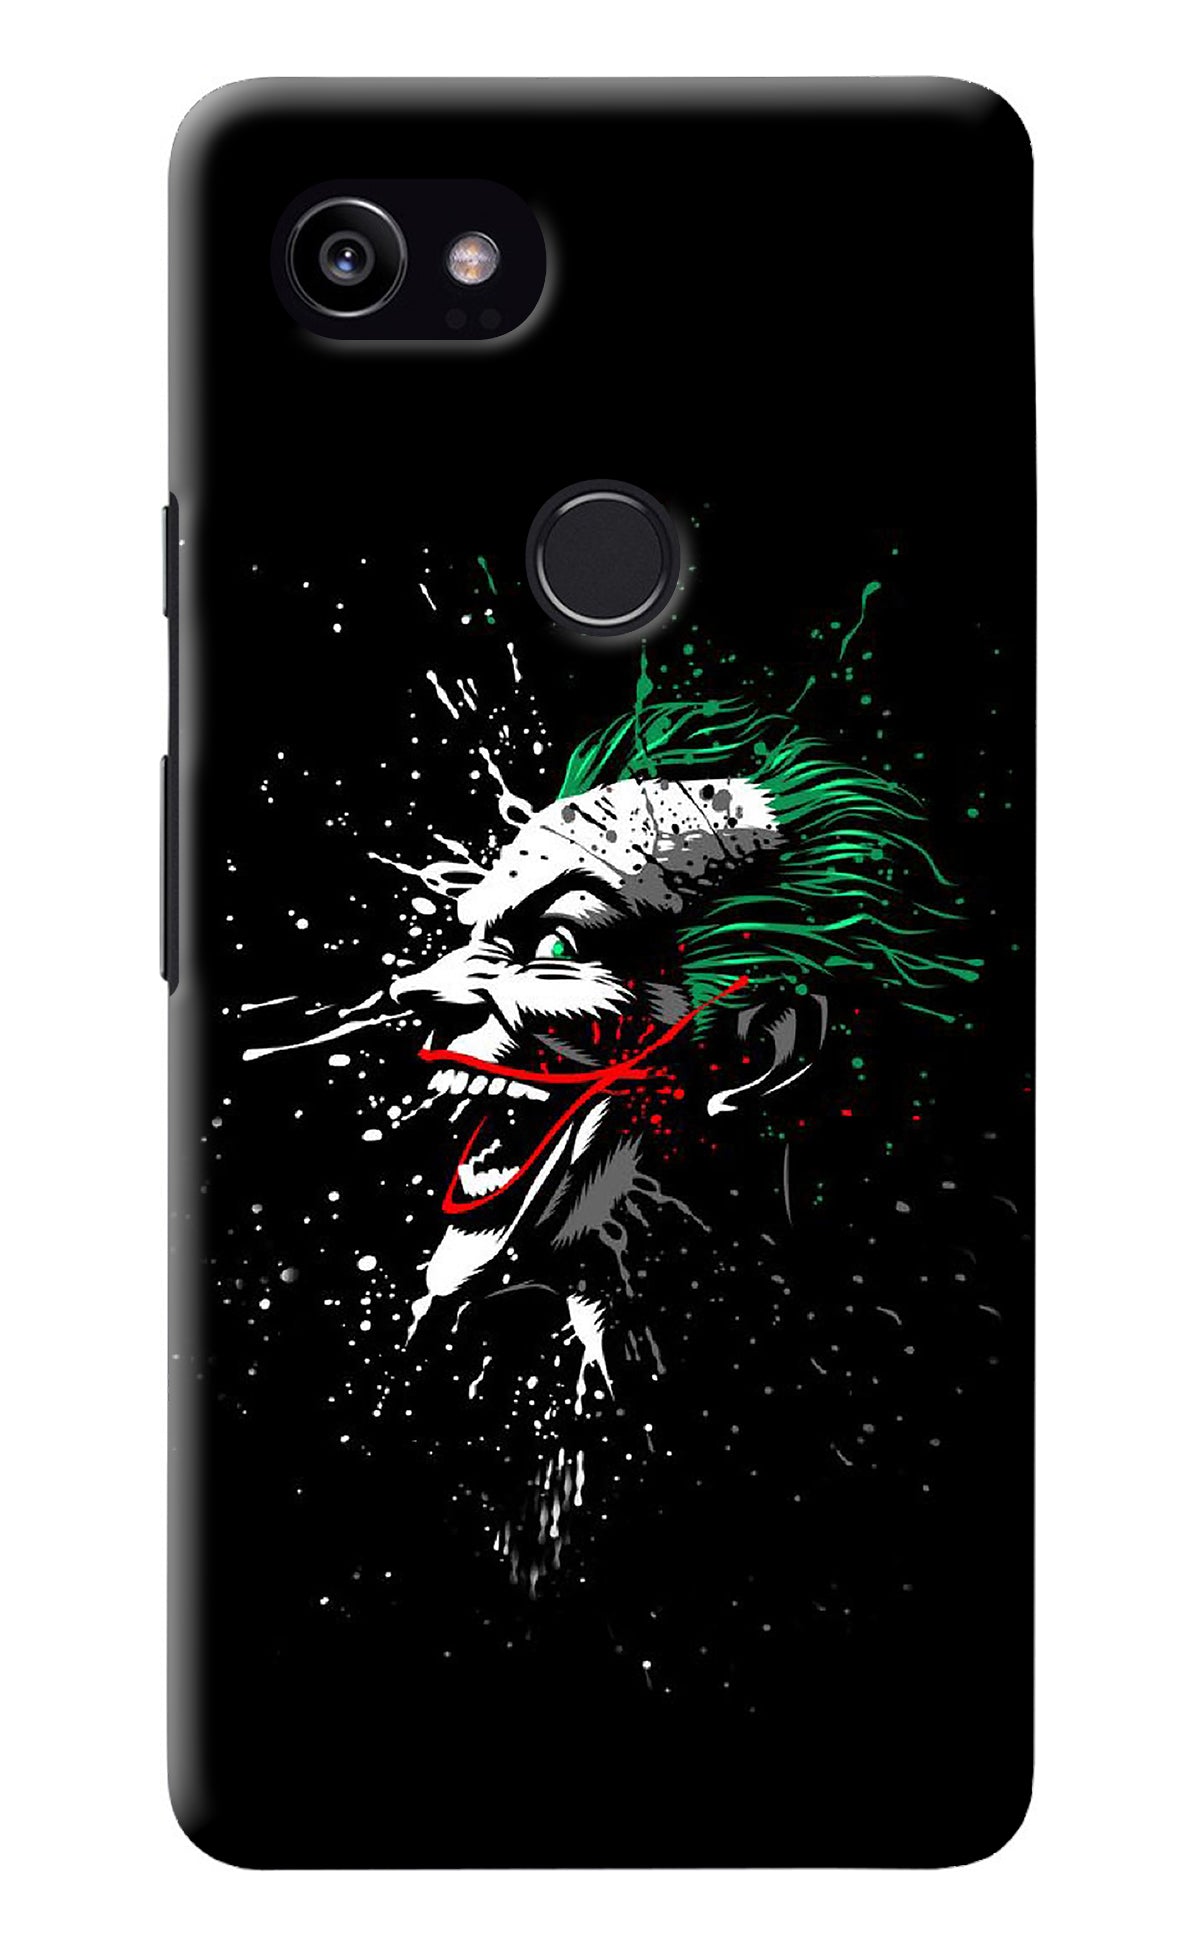 Joker Google Pixel 2 XL Back Cover